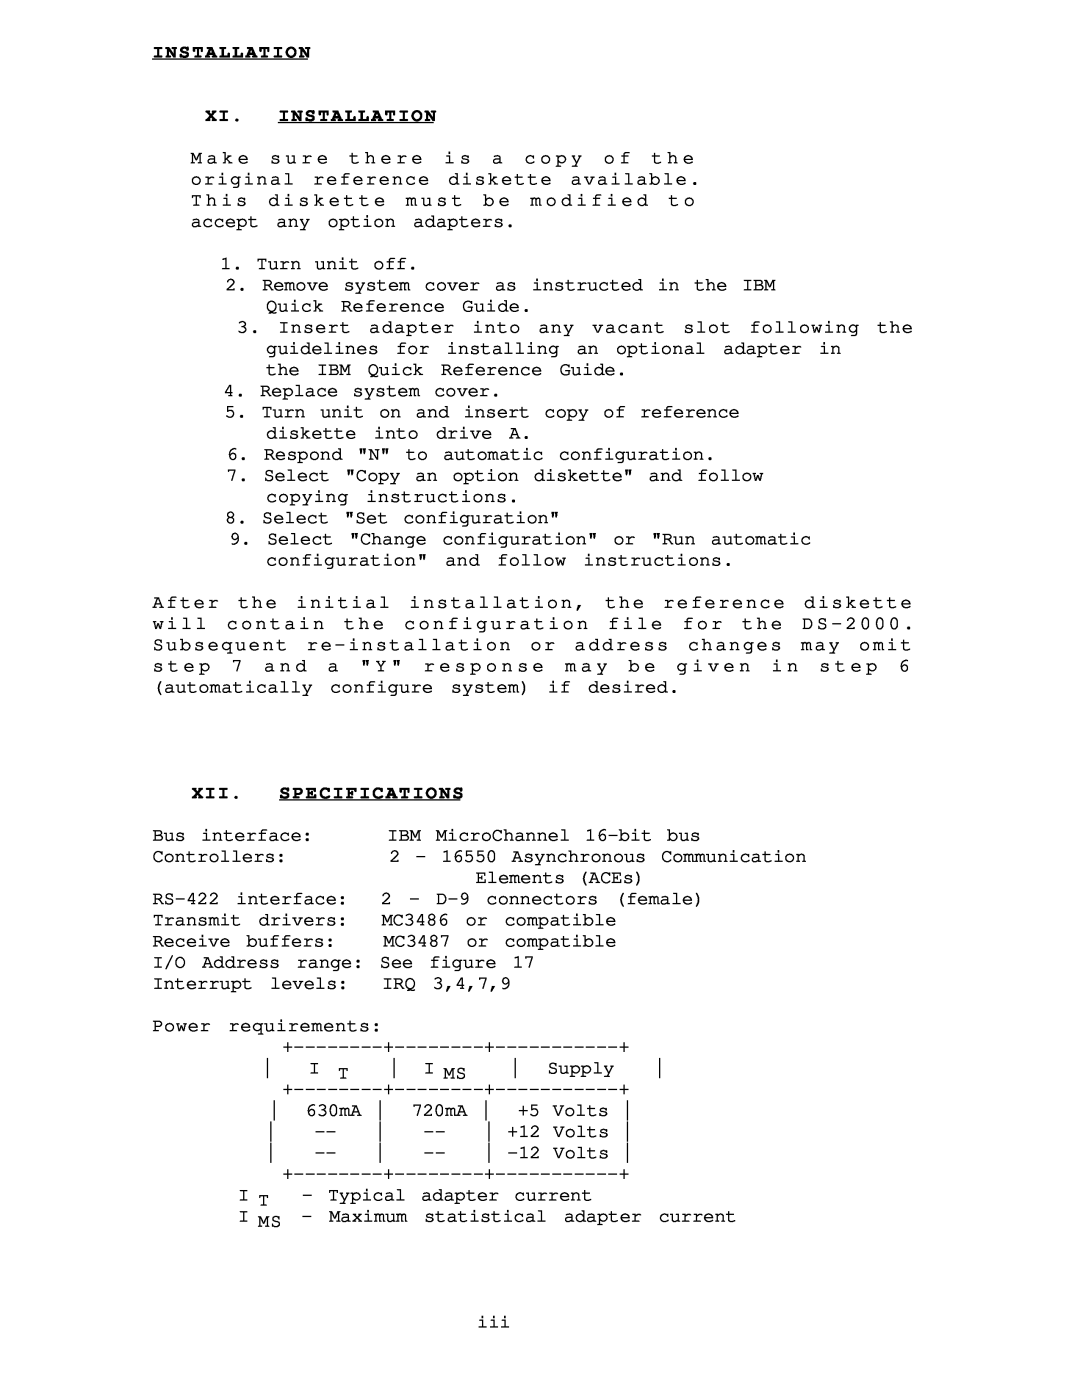 IBM DS-2000 warranty Installation Xi. Installation, Specifications 